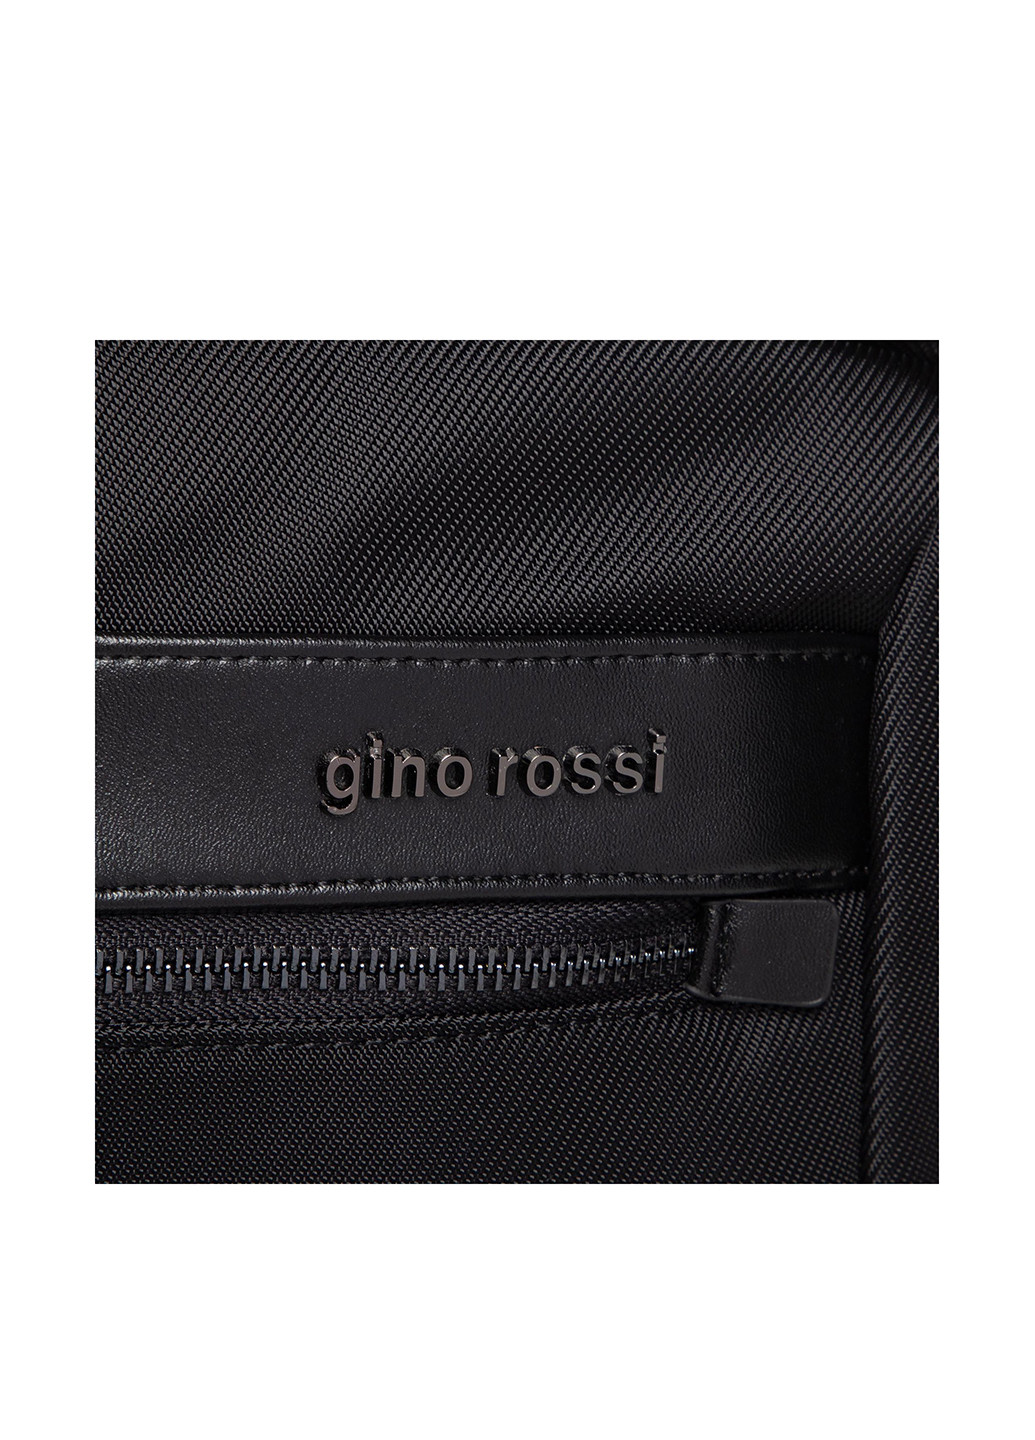 Сумка чоловіча Gino Rossi BGM-S-080-10-04 Gino Rossi однотонний чорний